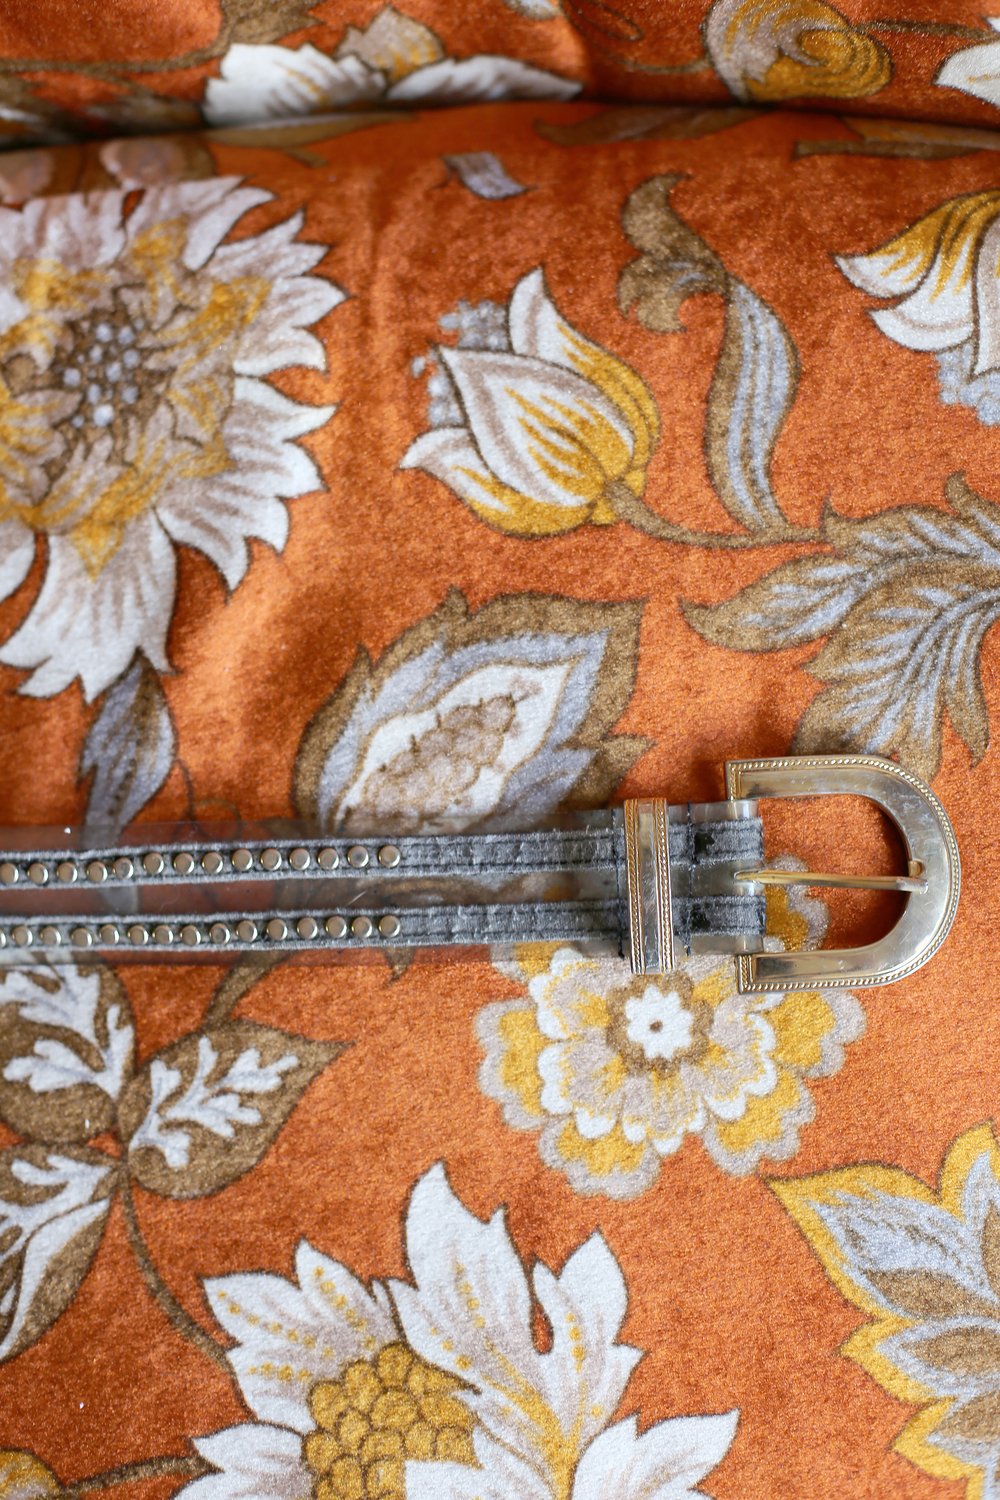 Vintage Studded PVC Belt